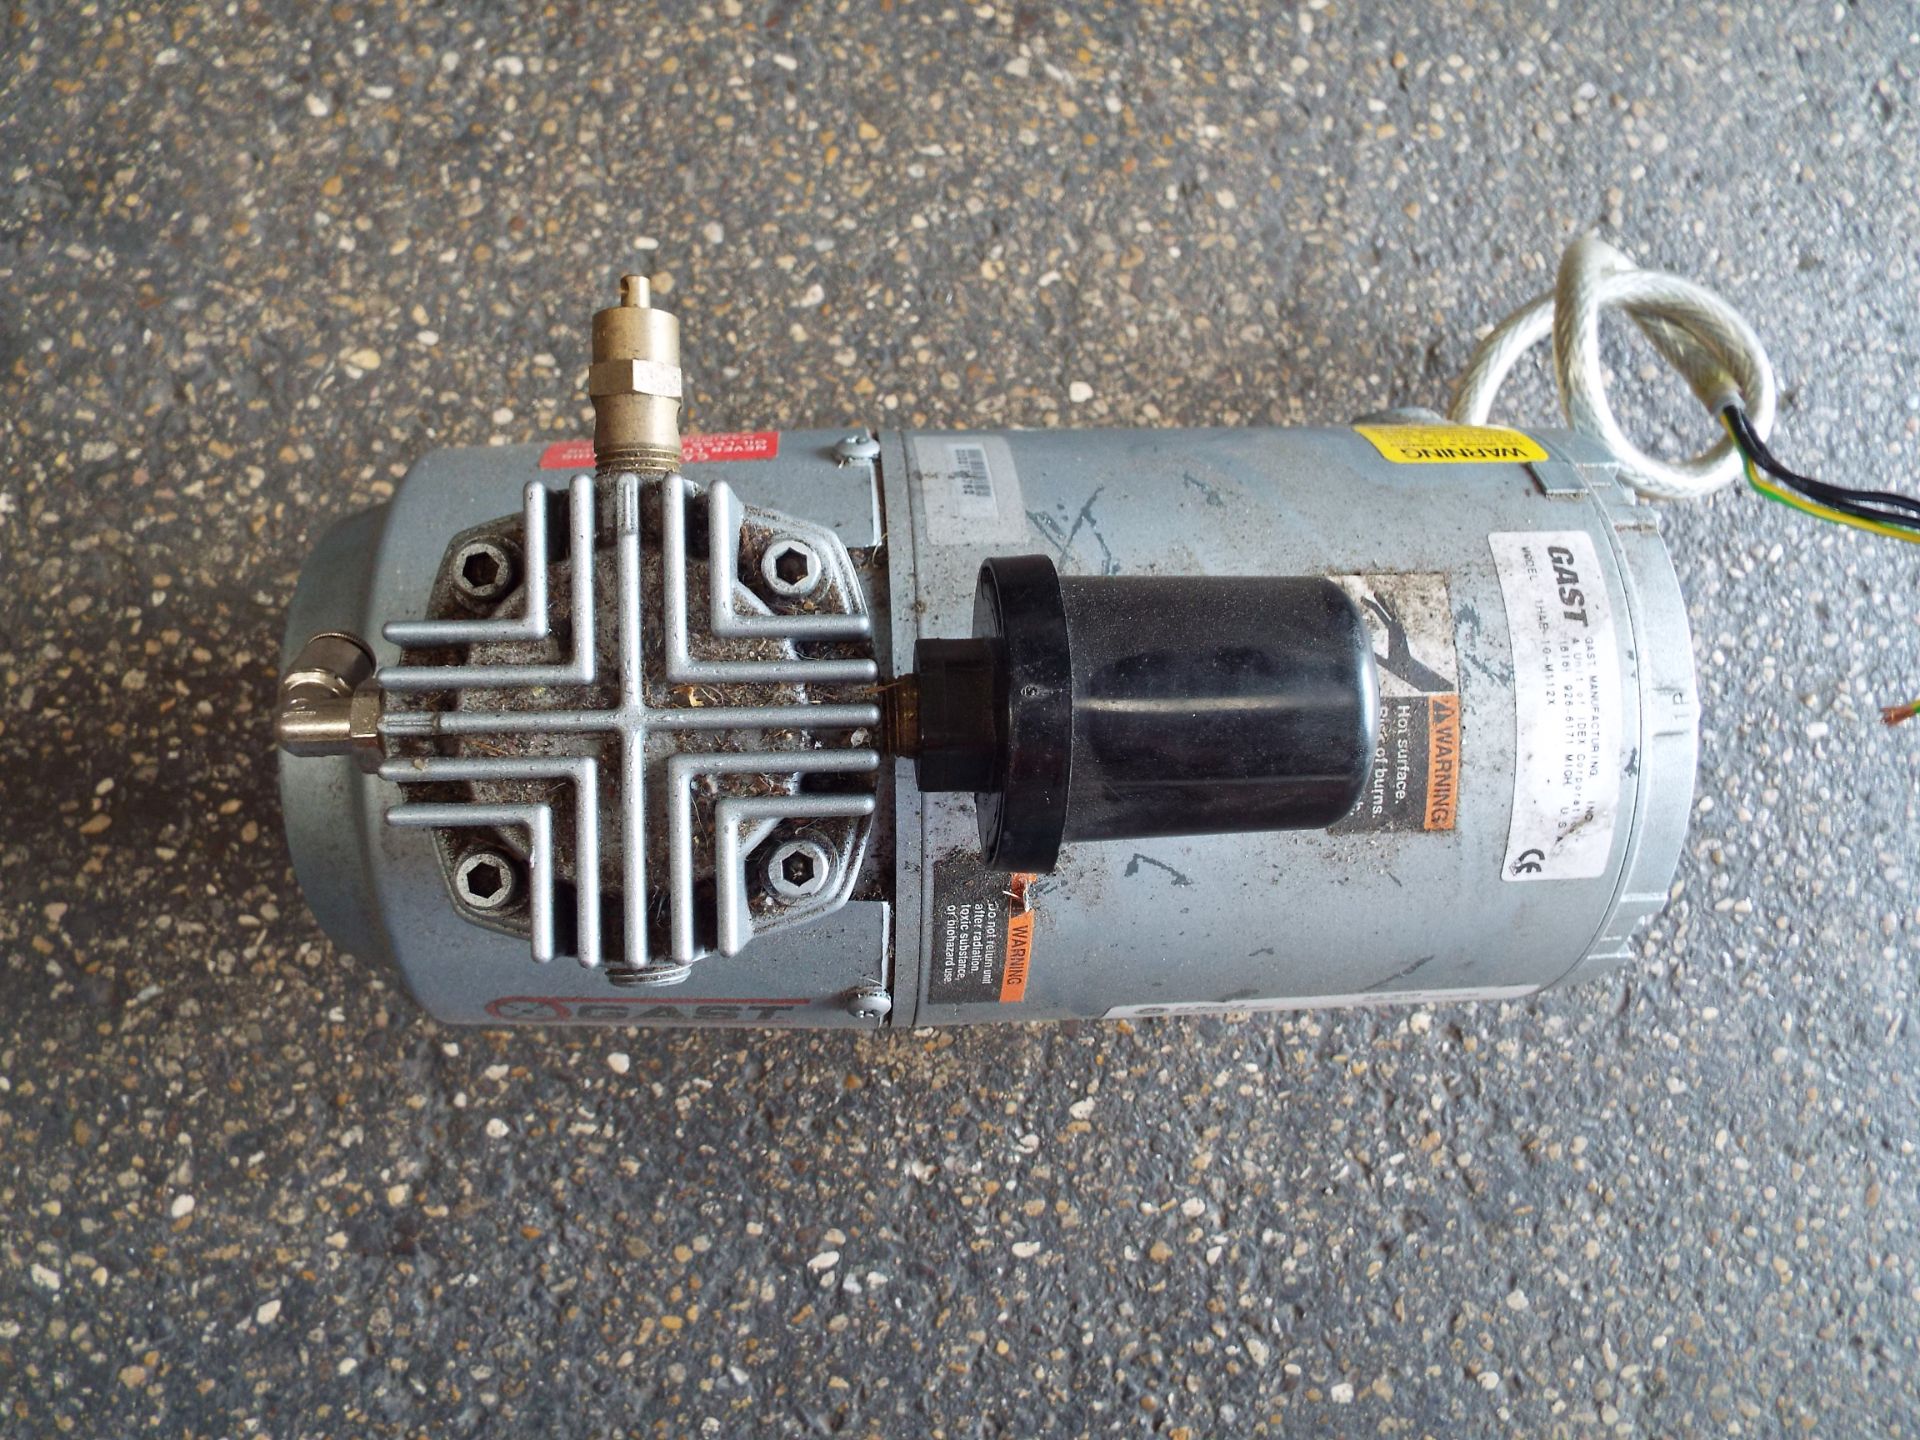 Gast 1H Oil-Less Compressor/Vaccuum Pump - Image 3 of 8